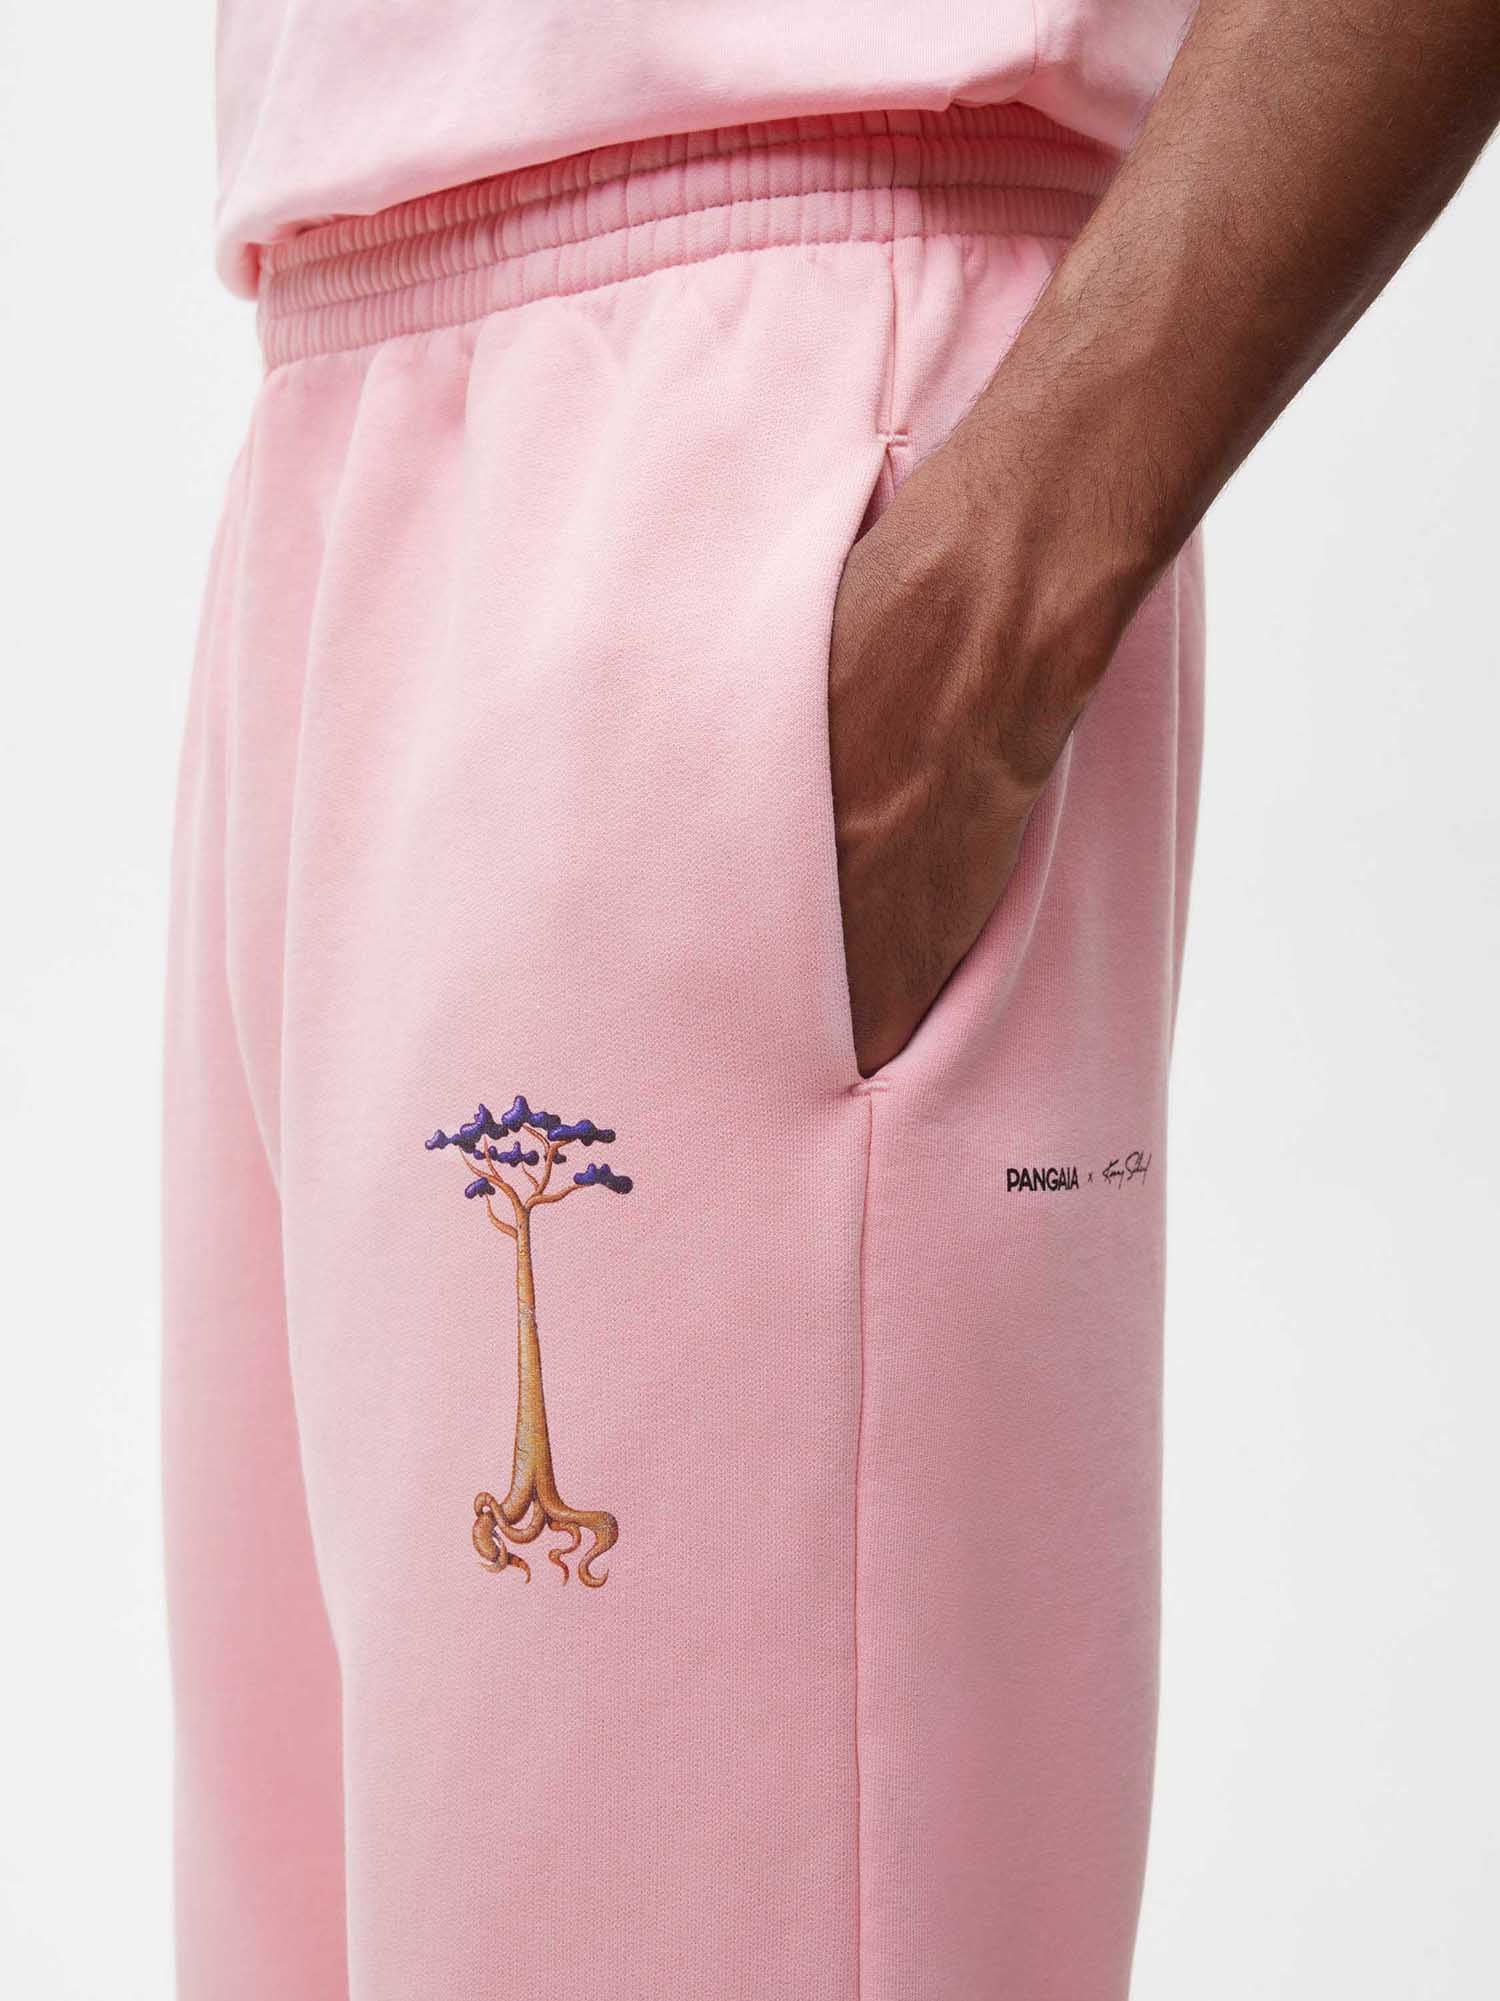 Pangaia-Kenny-Scharf-365-Signature-Track-Pants-Swamp-Style-Sakura-Pink-Male-2